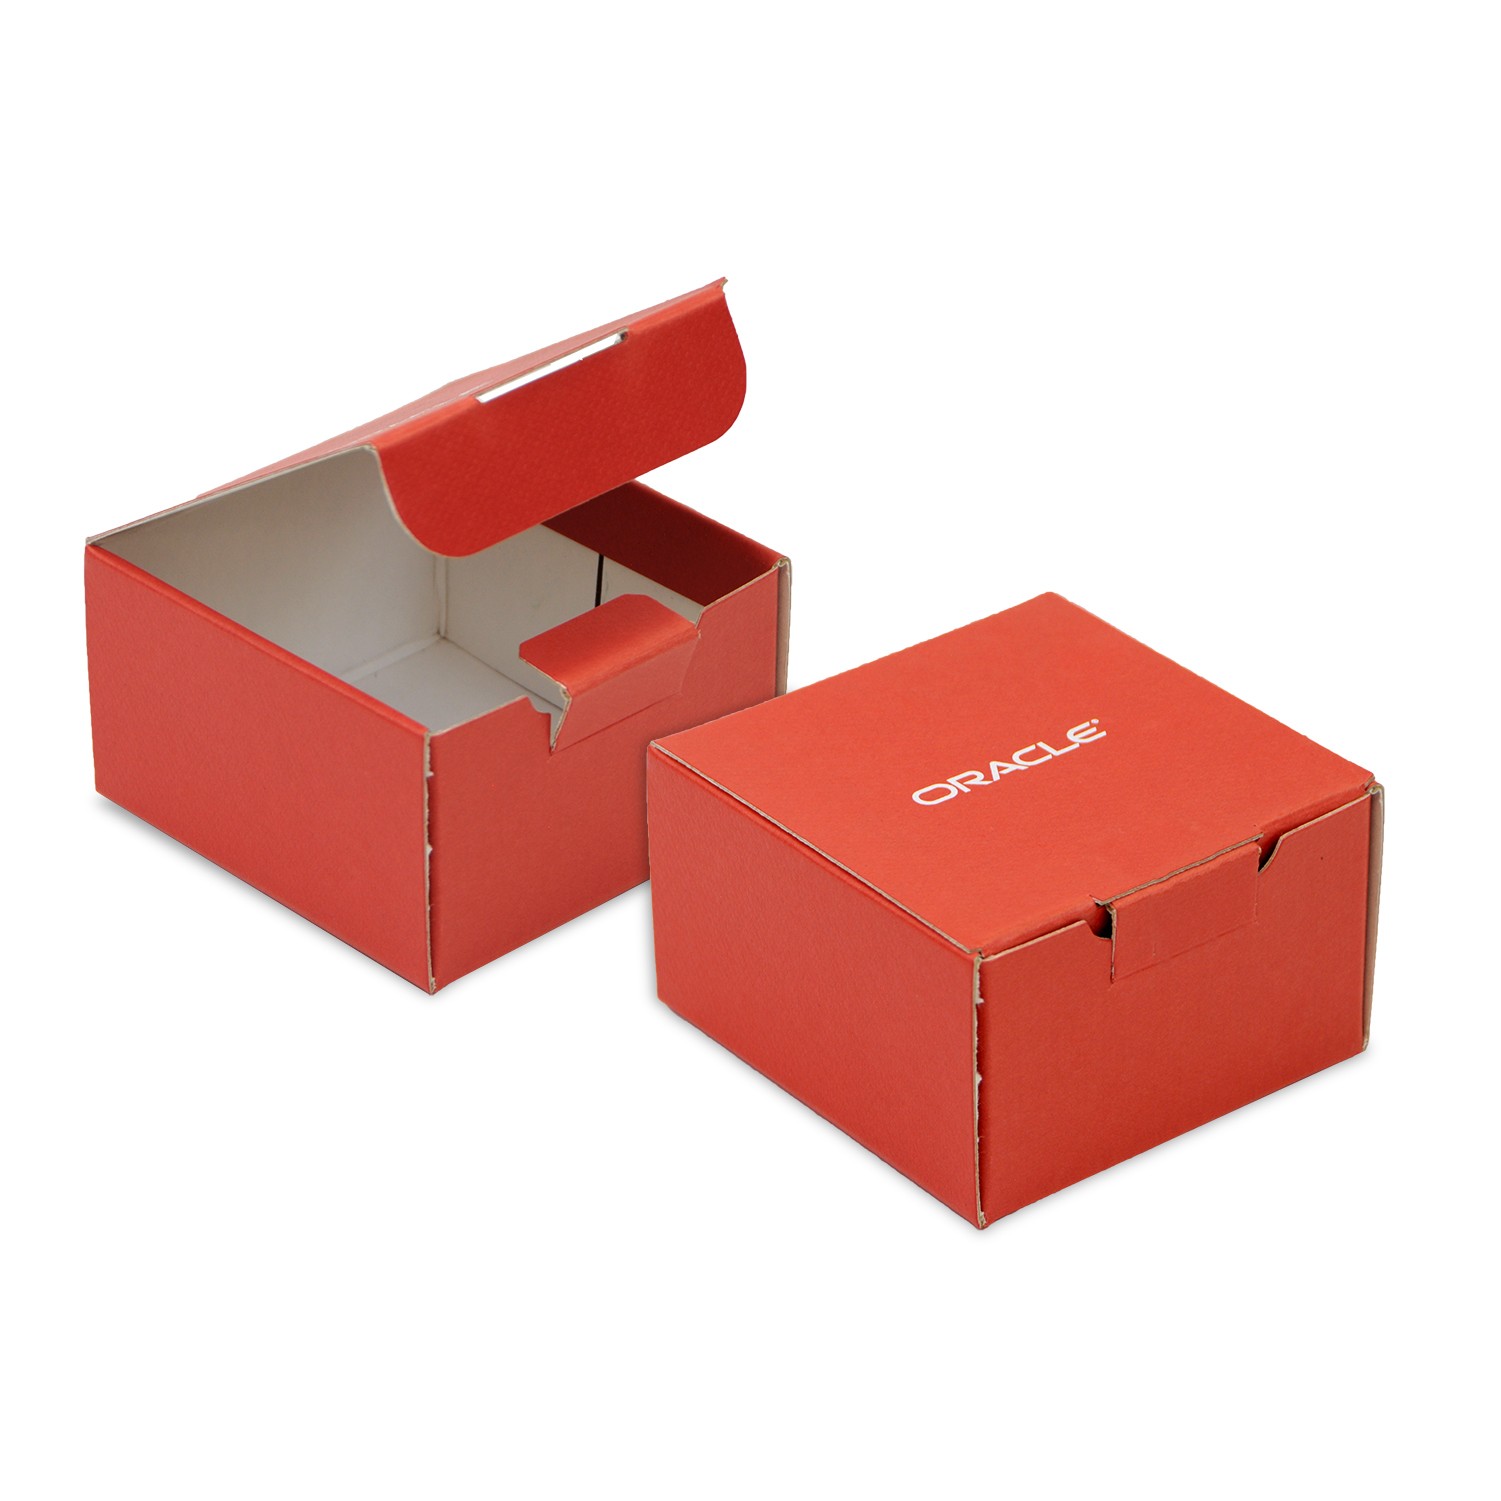 Box package. Складные коробки. Разборная коробка. Брендовые коробки. Коробки с язычком для упаковки.